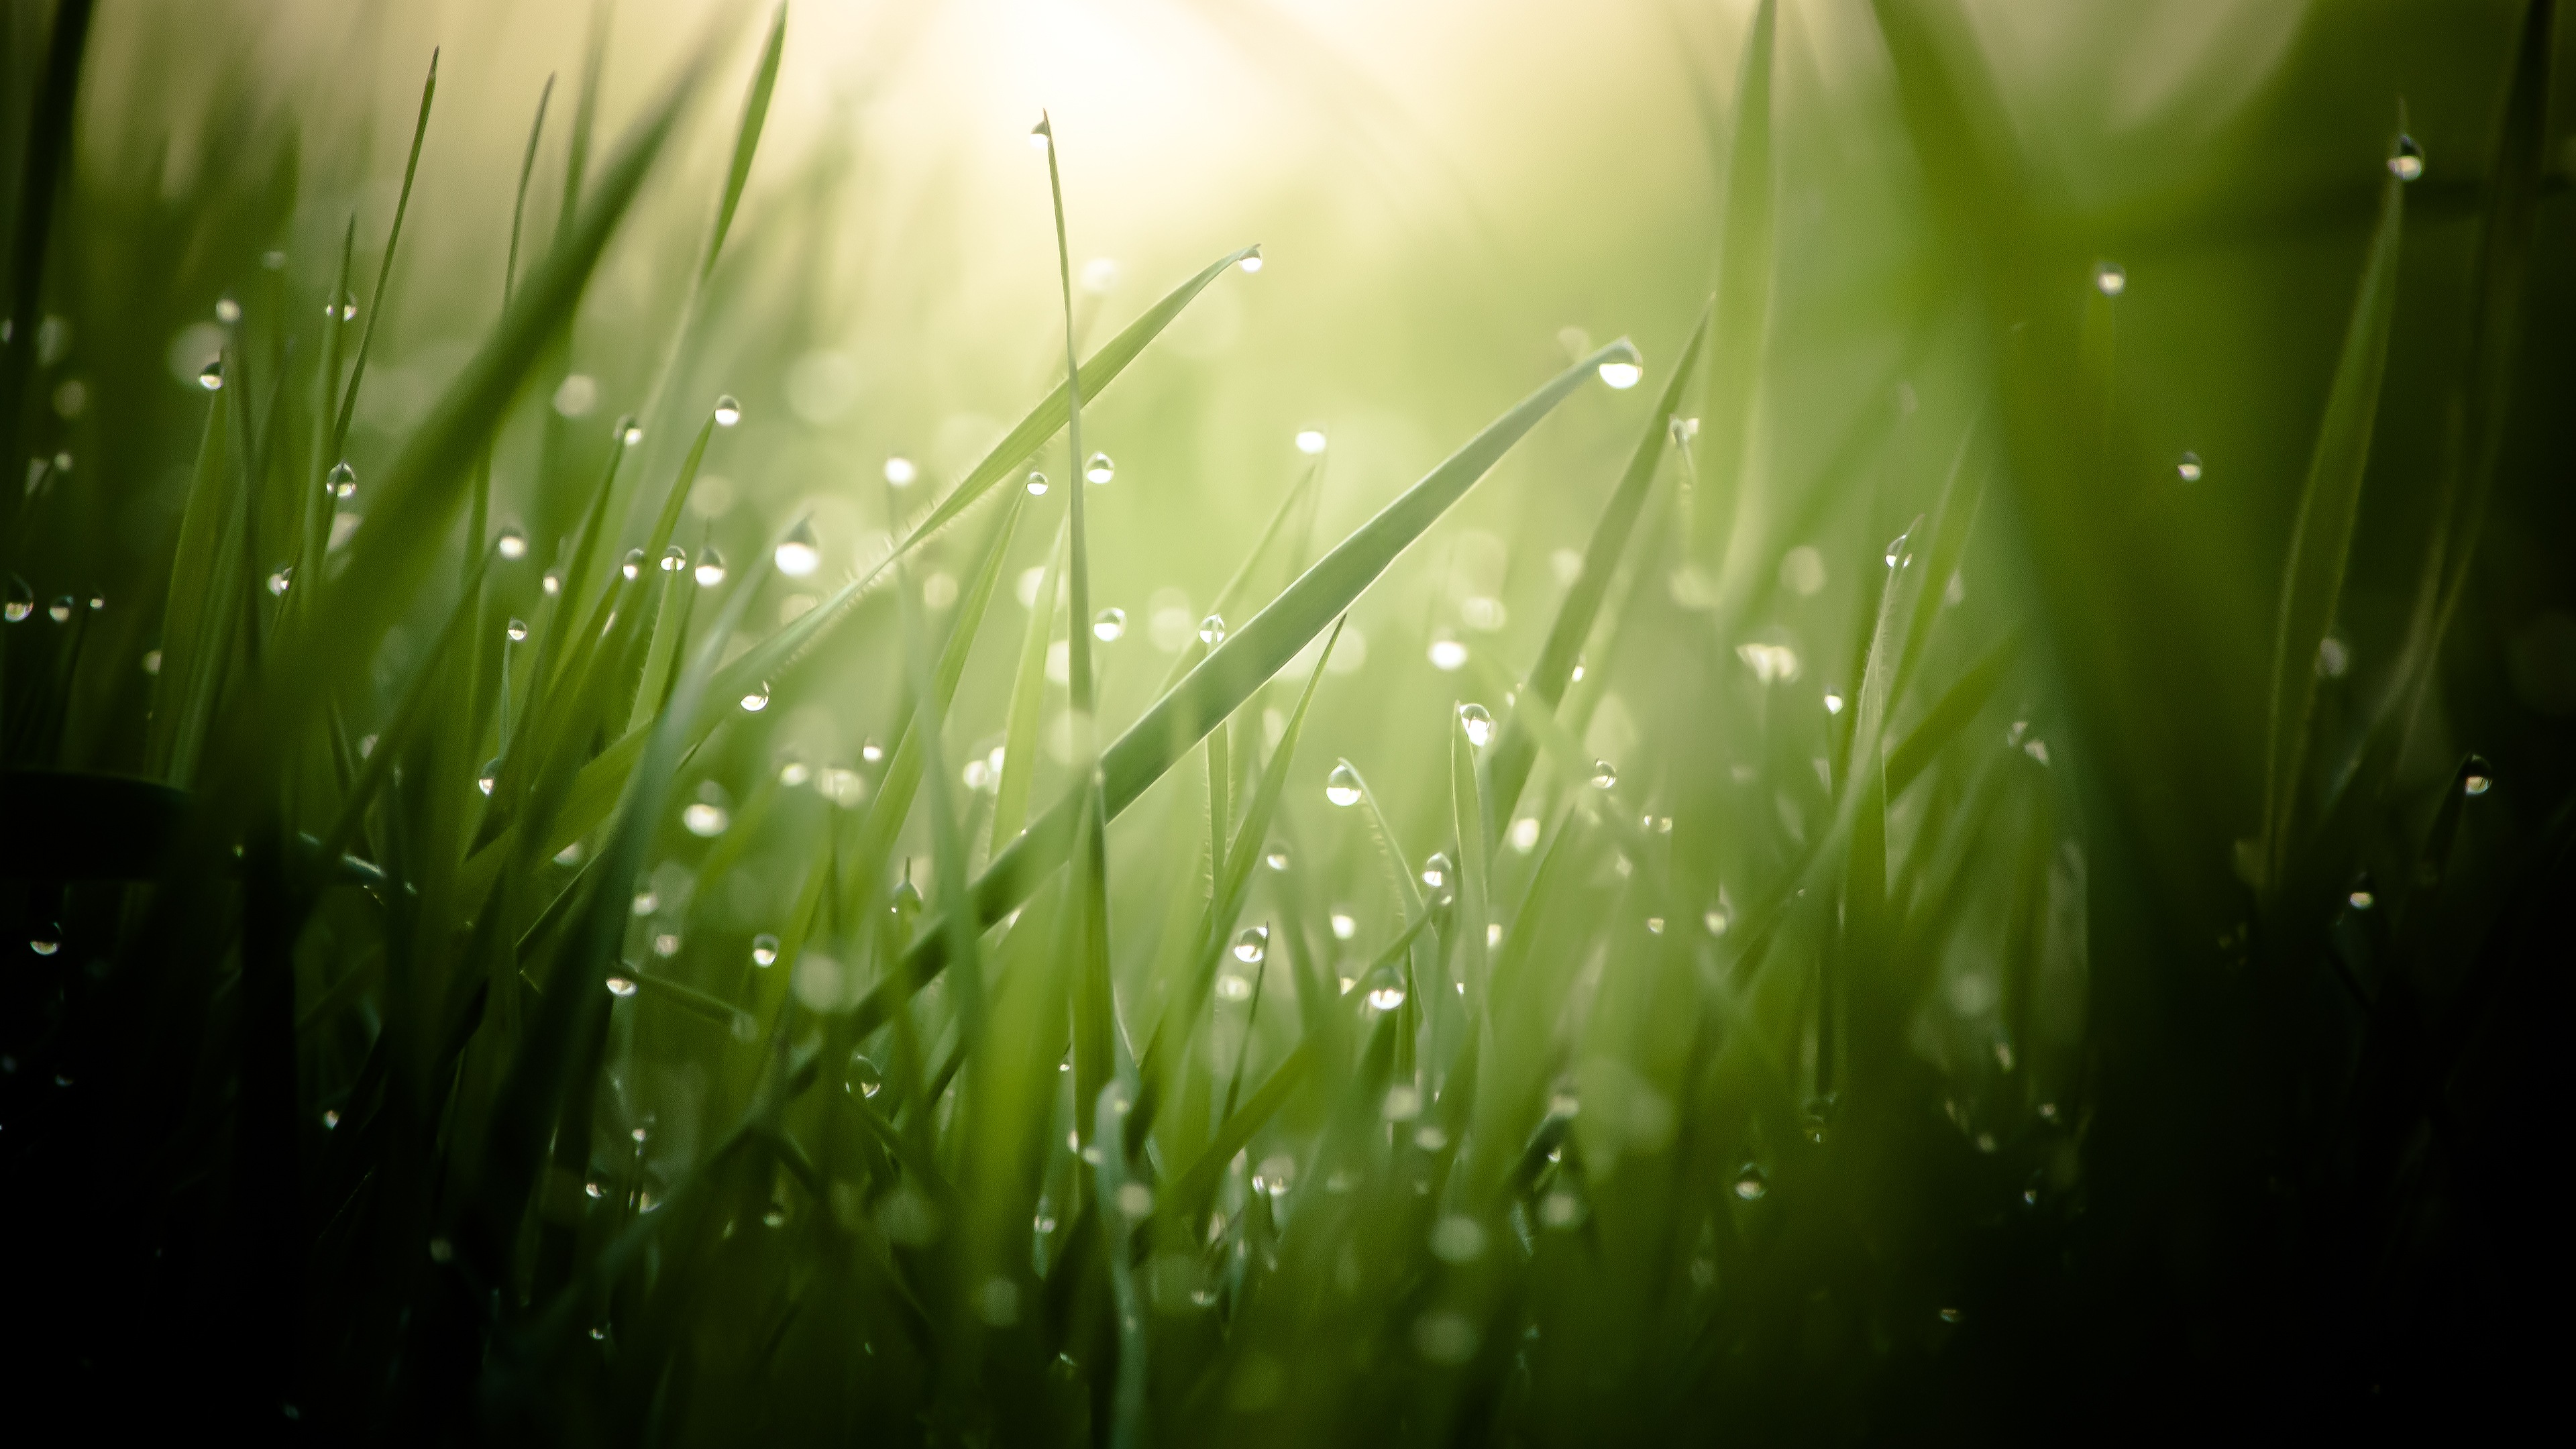 Morning Dew On Grass Threads 4K Ultra HD Desktop Wallpaper Uploaded by